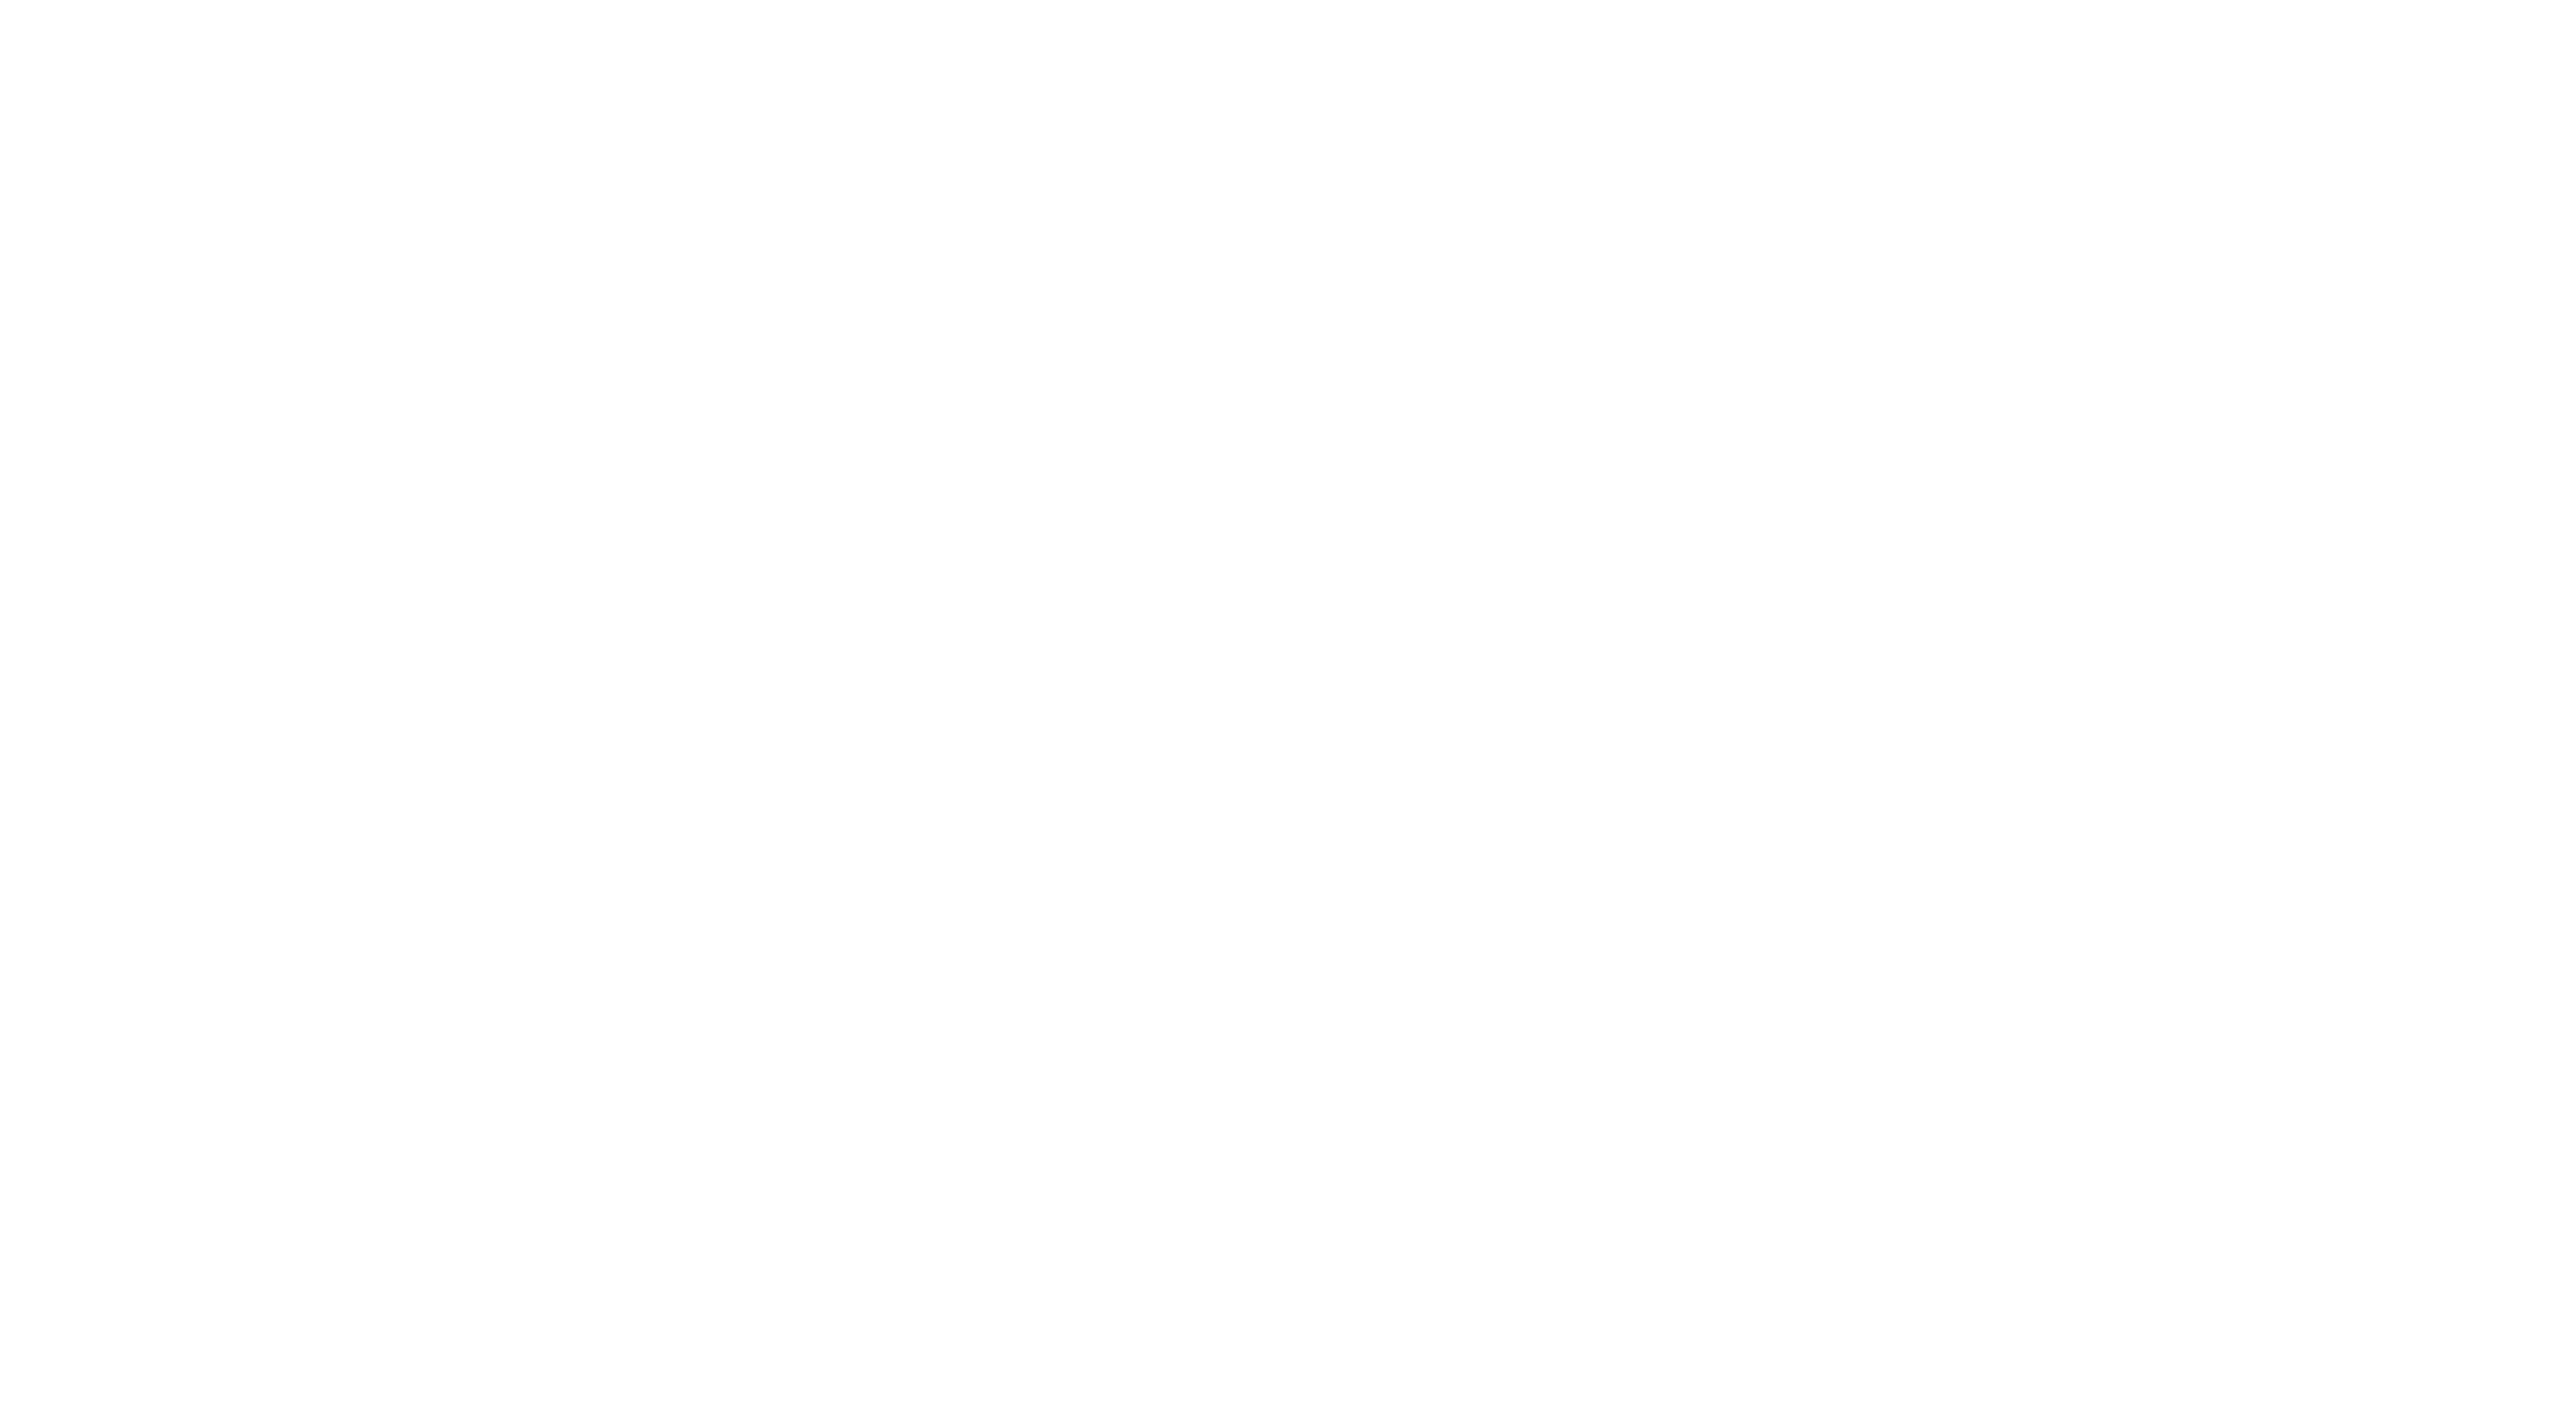 France API